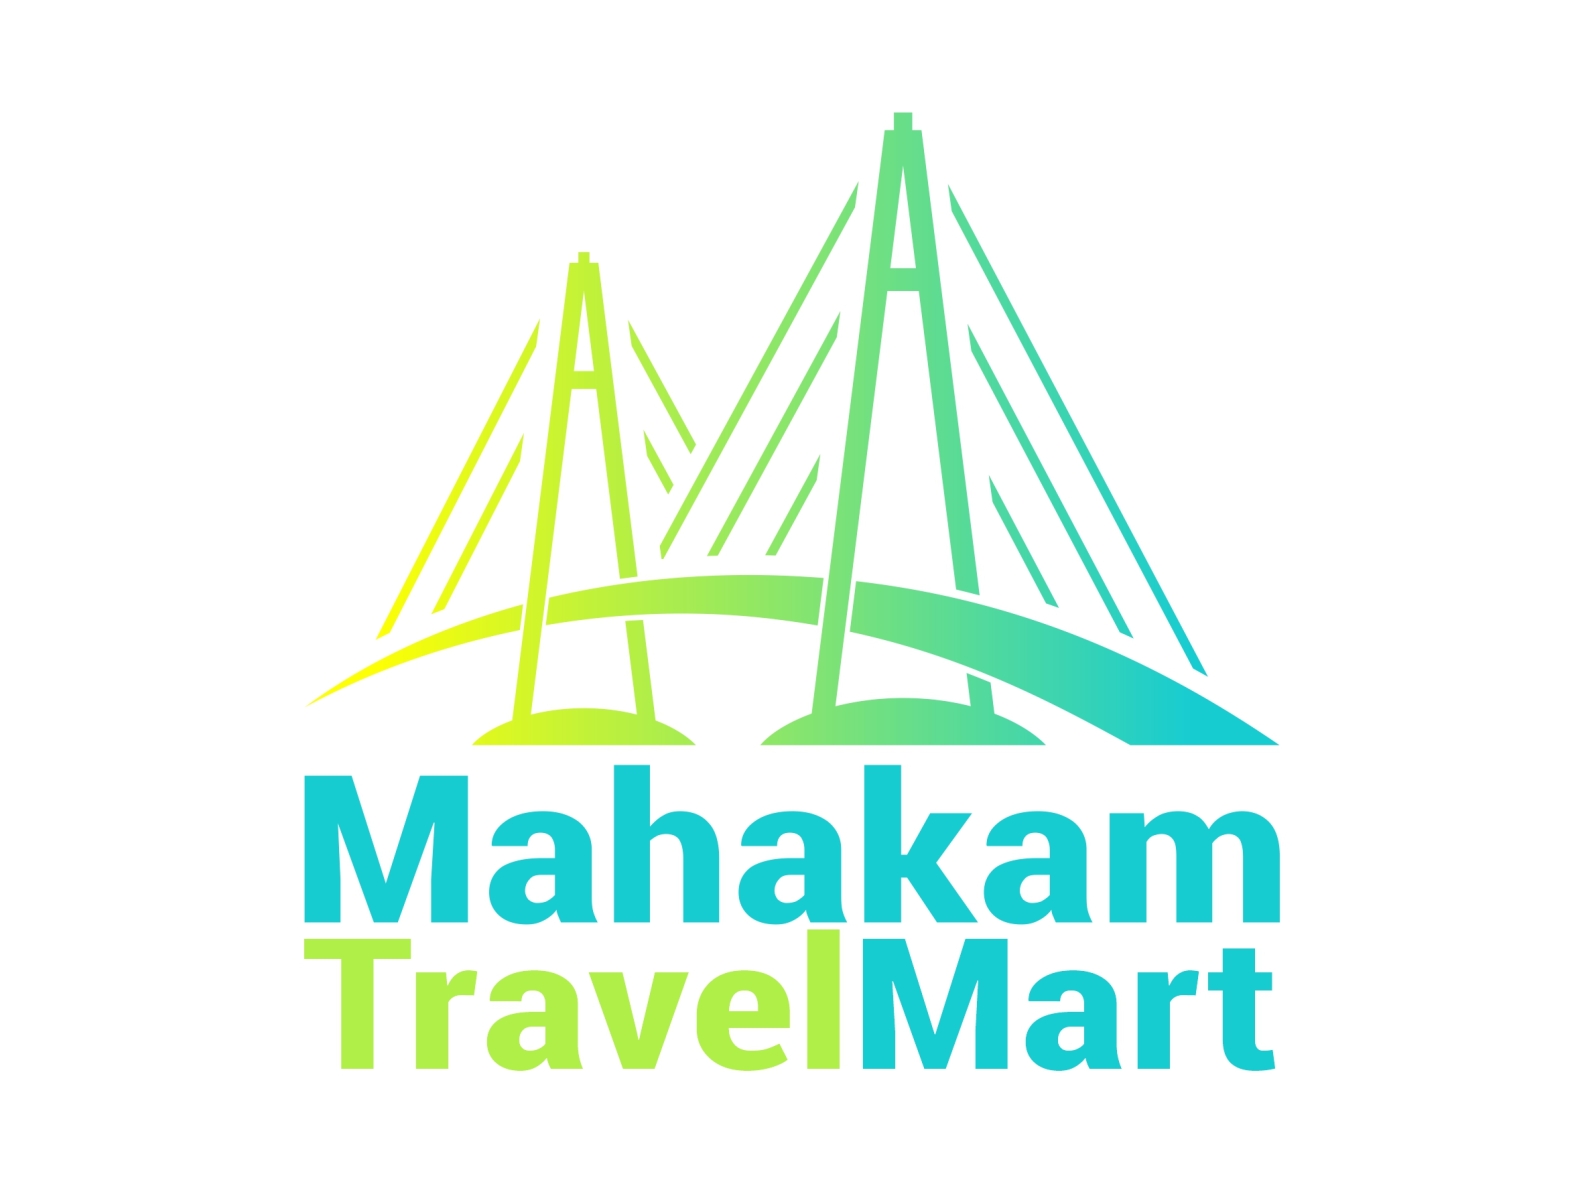 Travel mart. Travel Mart логотип. MTM логотип. Tashkent Travel Mart logo. Davlat MTM logo 2024.